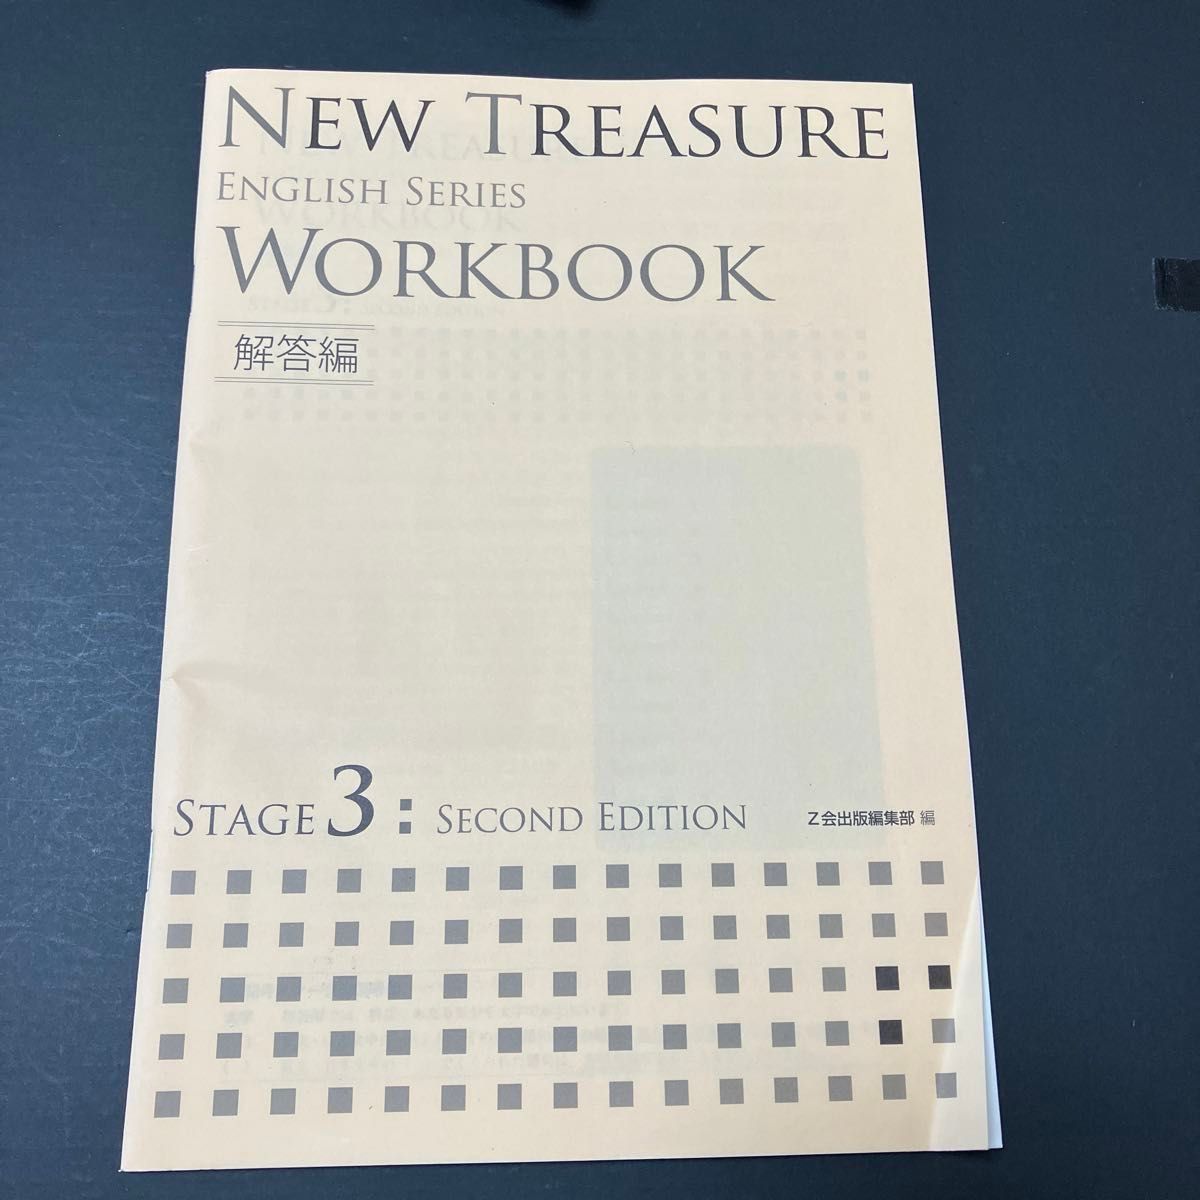 NEW TREASURE WORKBOOK STAGE 3 (ENGLISH SERIES)